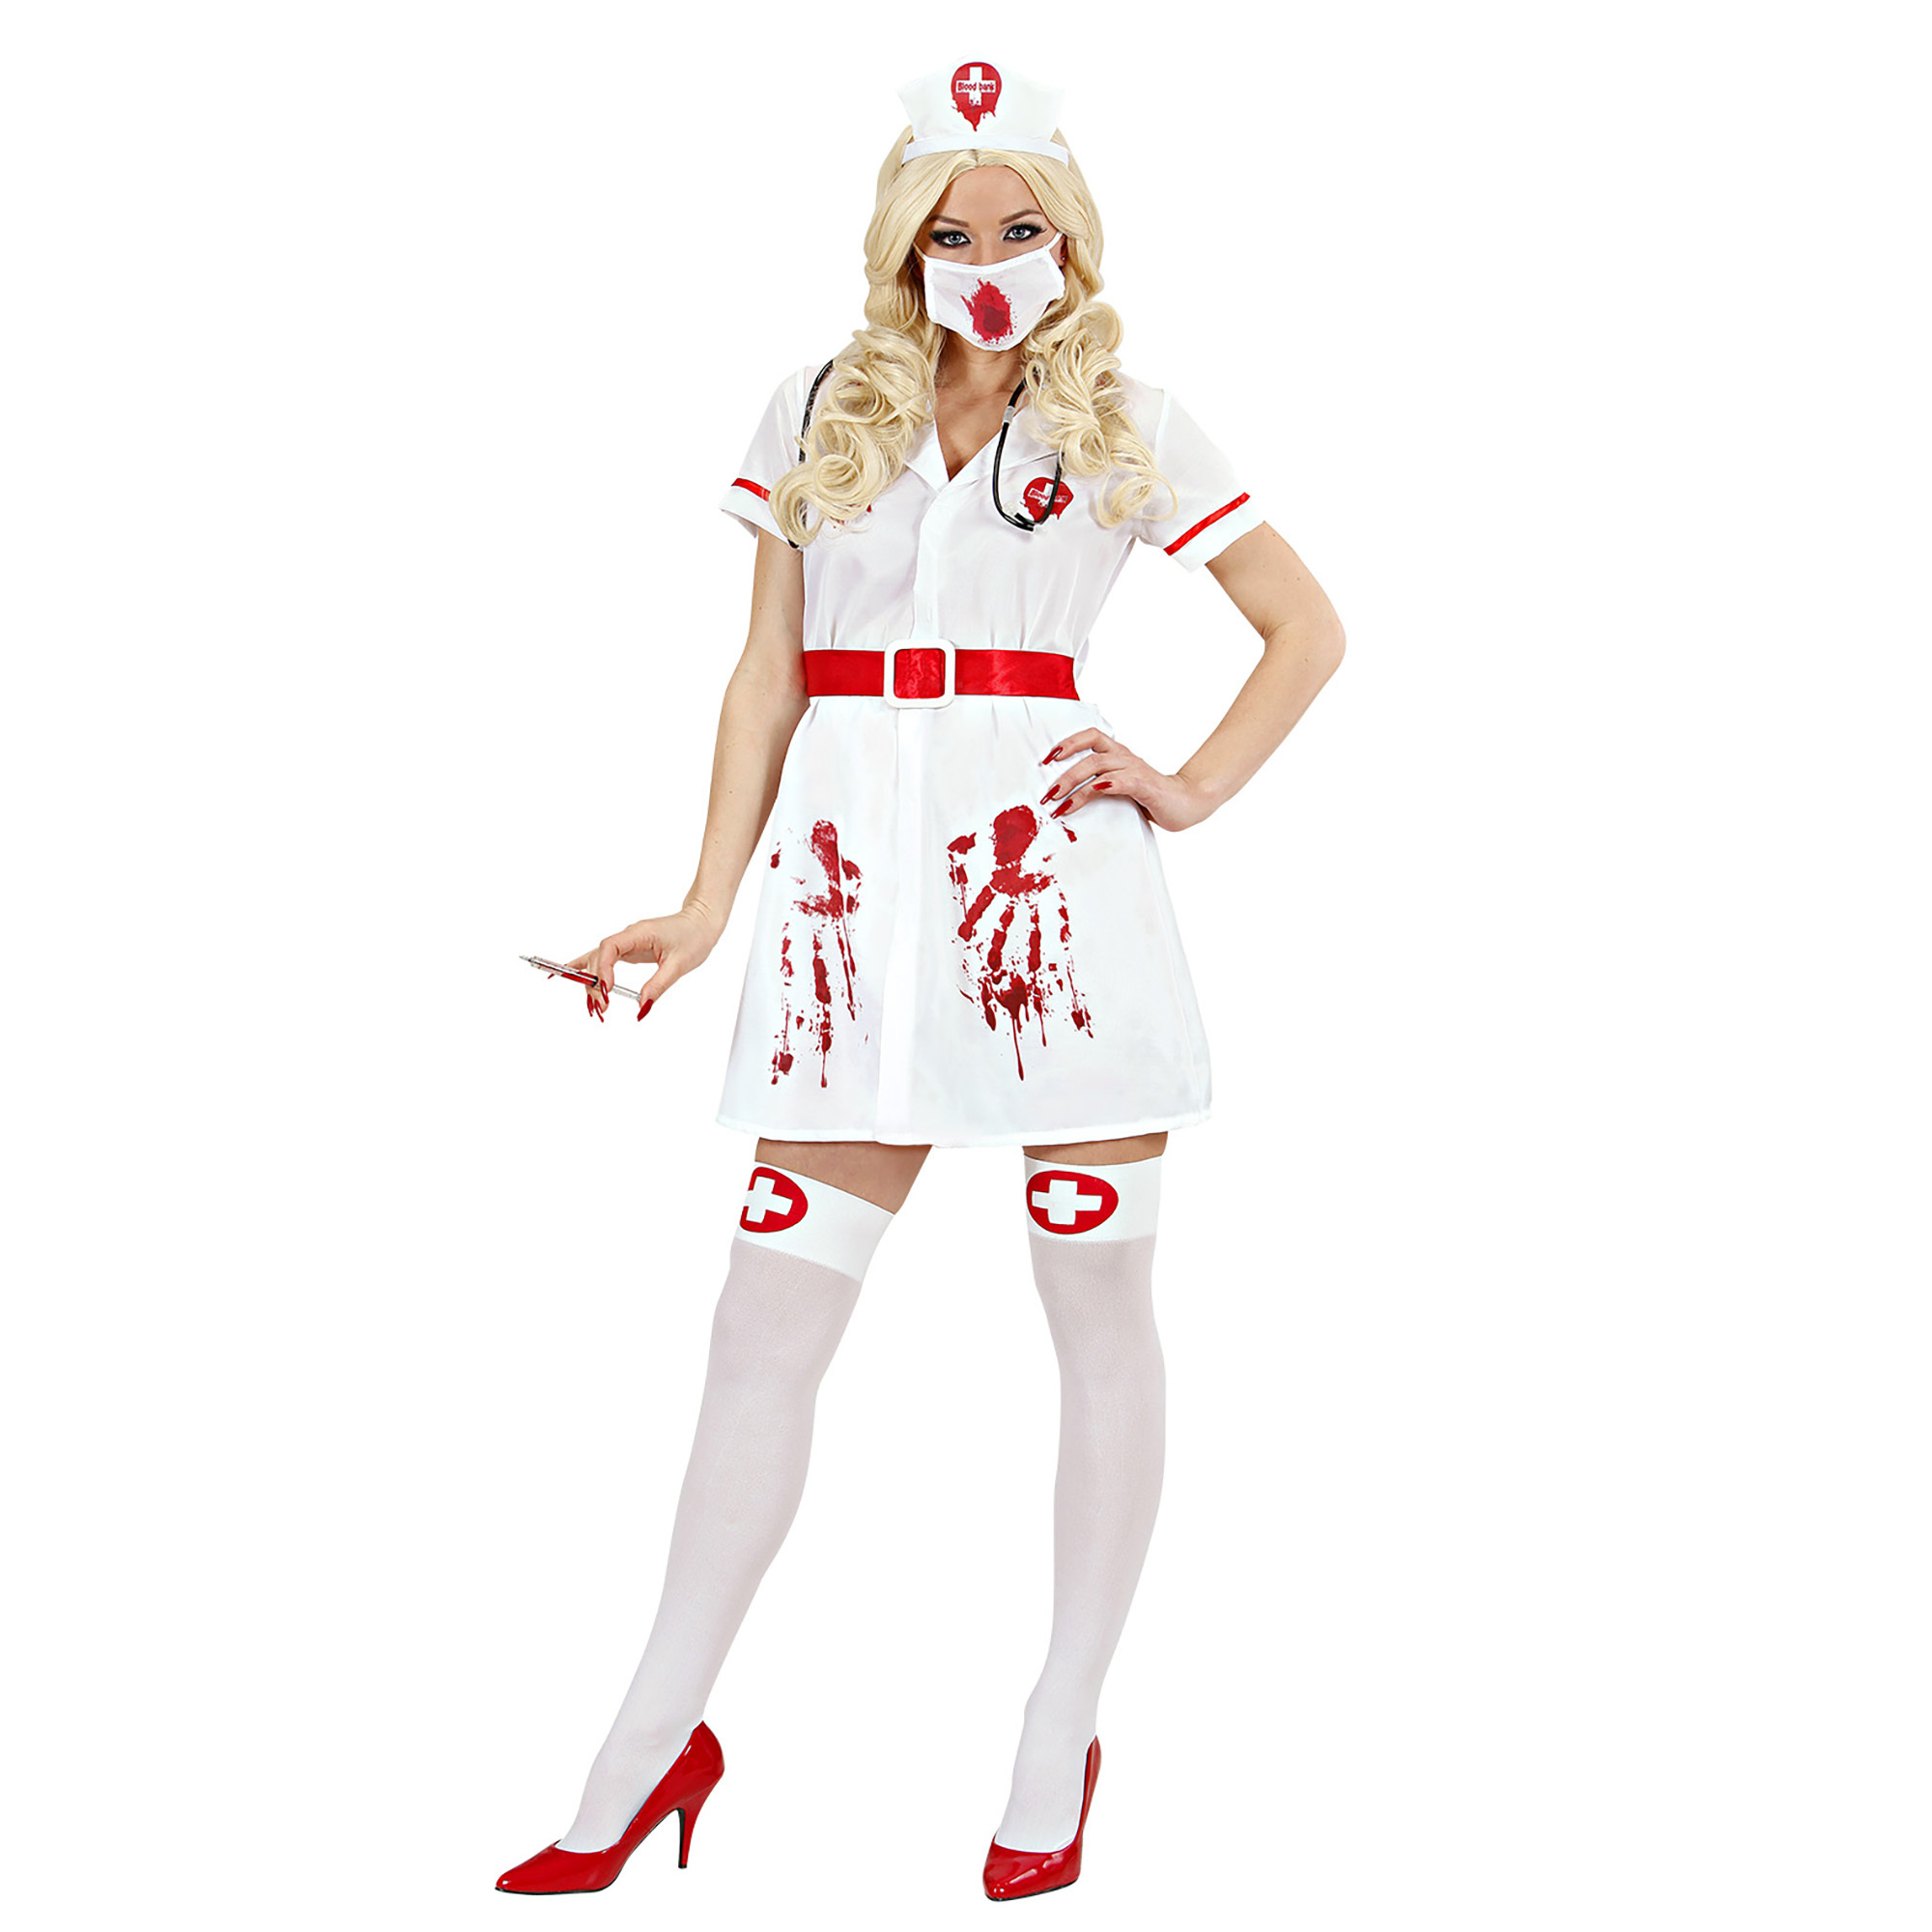 bloederig verpleegster kostuum 